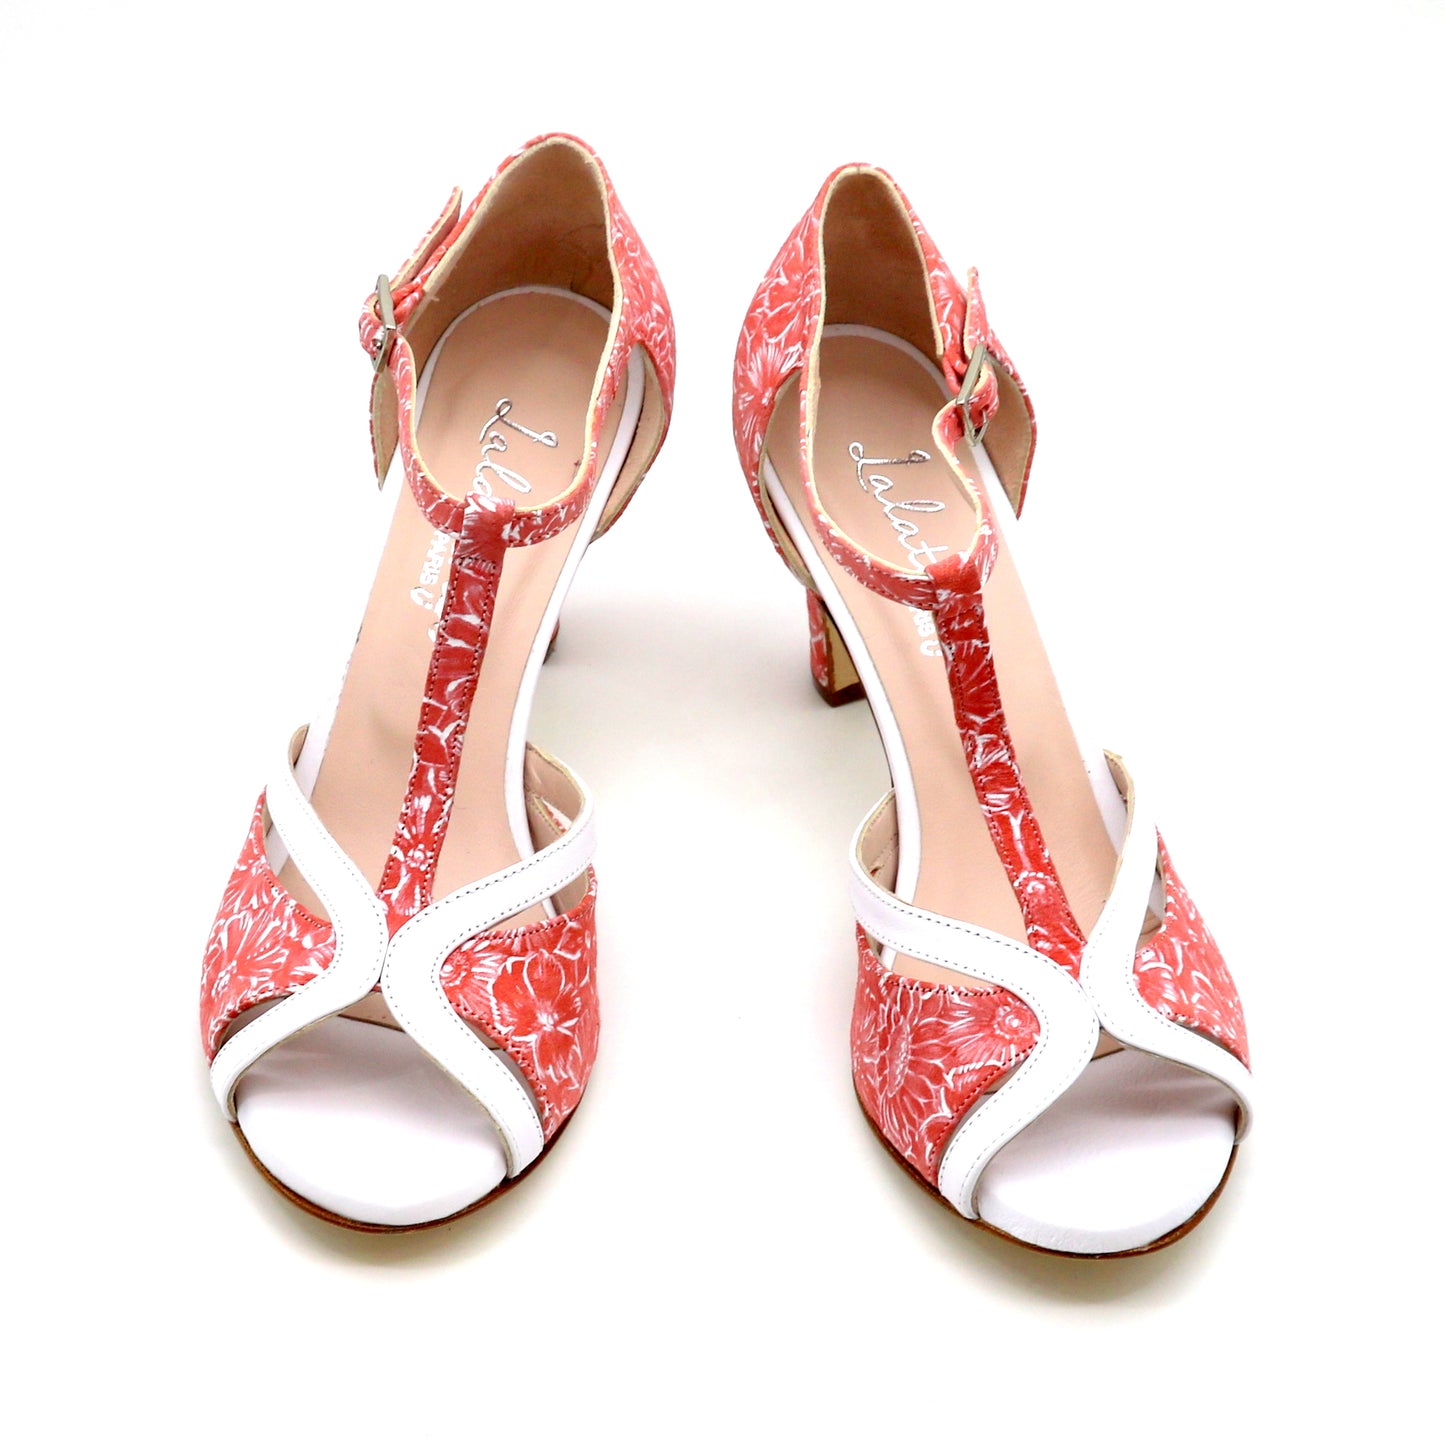 Coco coral flowers heels wide 7cm